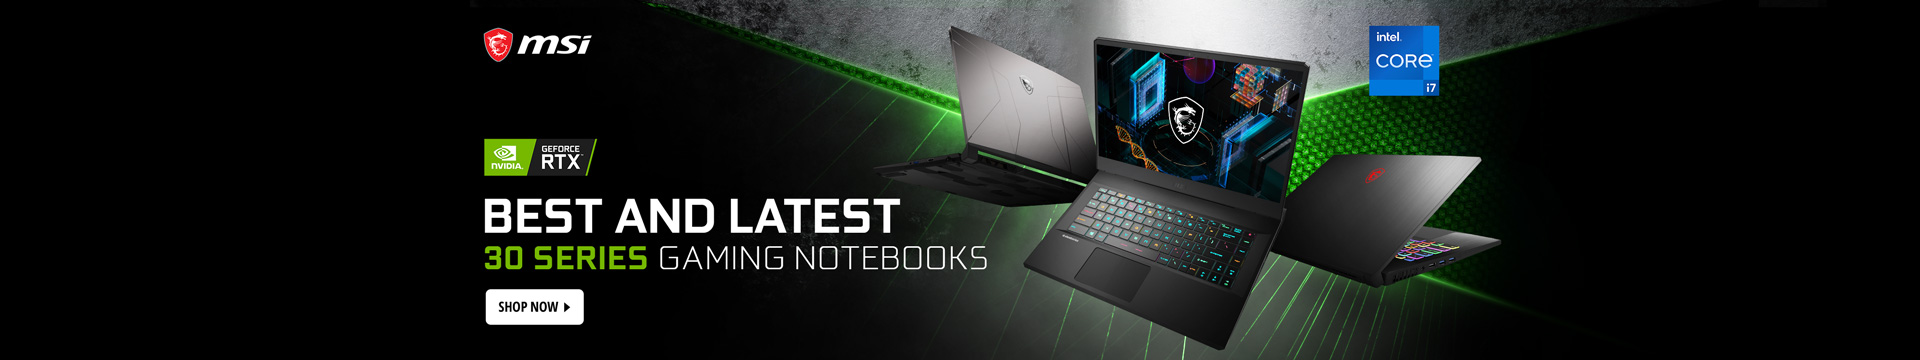 gaming laptops and notebooks newegg com